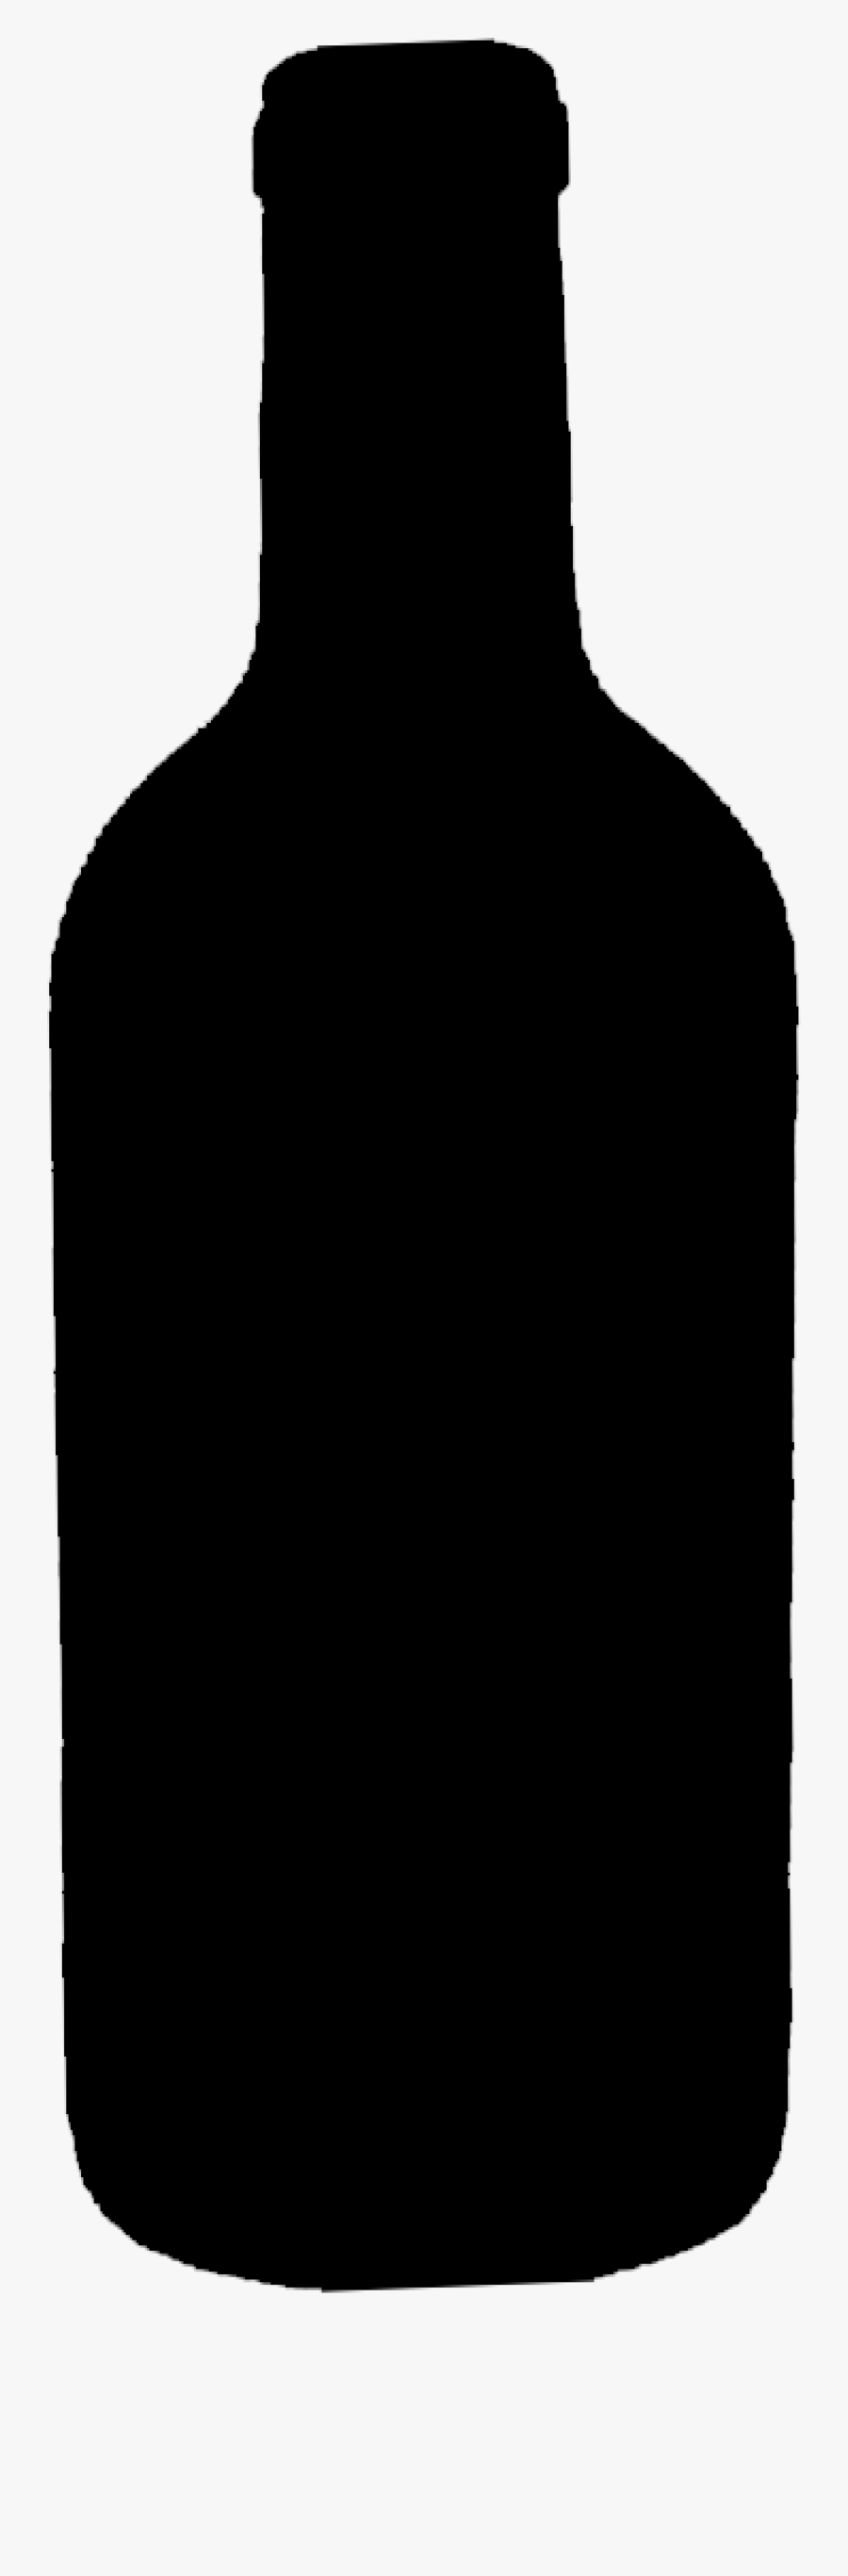 Transparent Water Bottle Clipart - Wine Bottle Black Clipart, Transparent Clipart